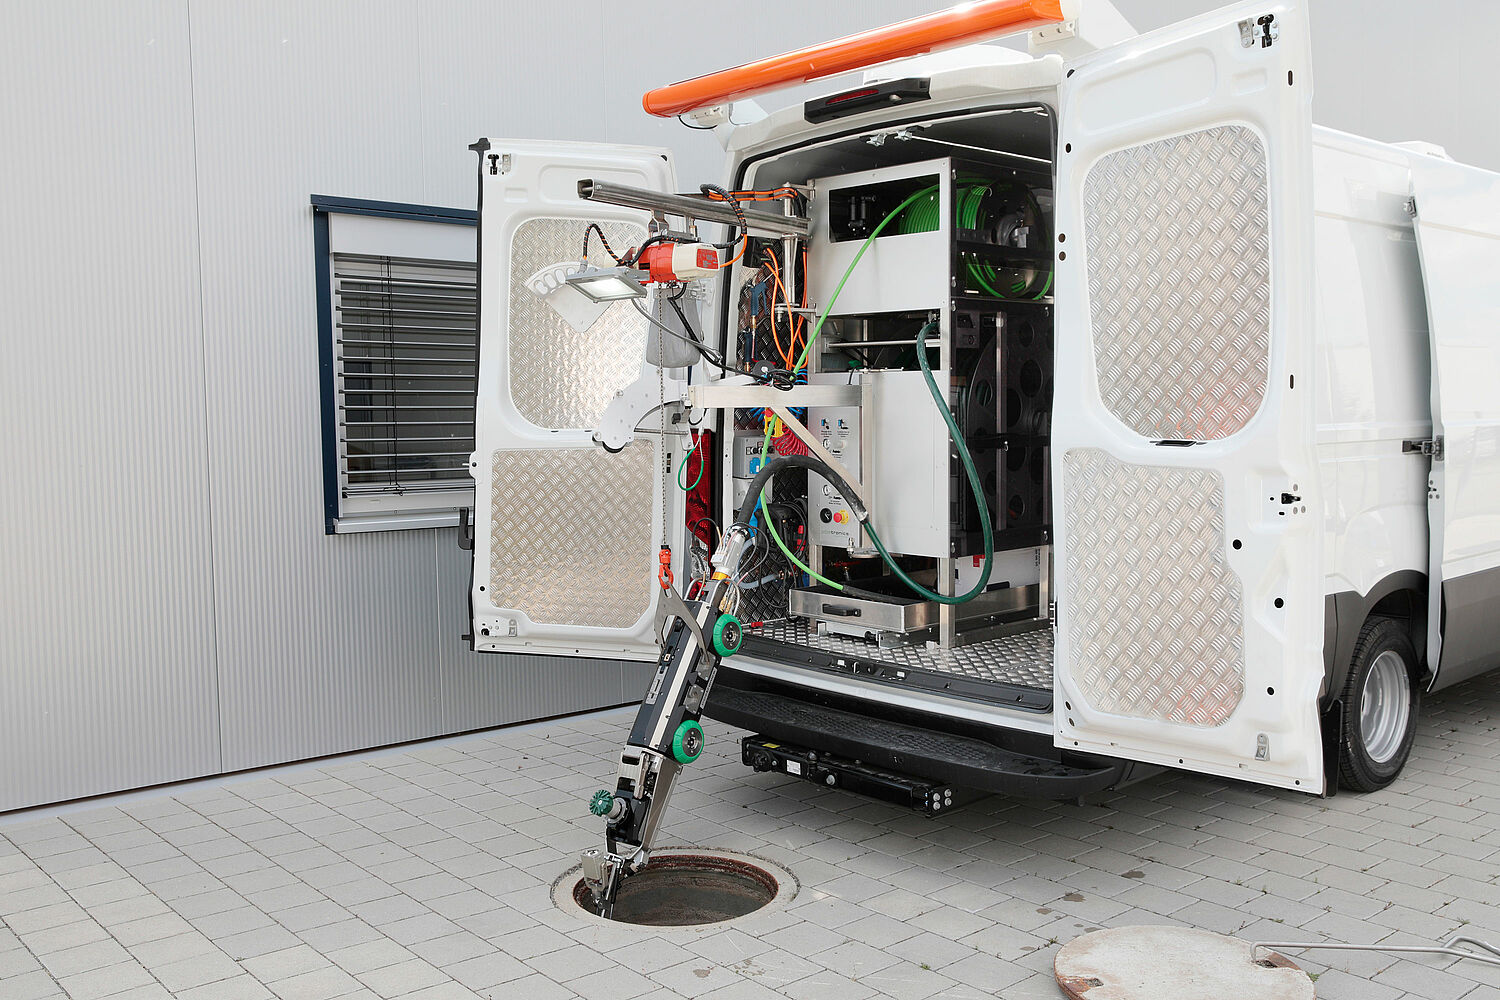 Brushless DC-Servomotors  by Faulhaber for robotic inspection system